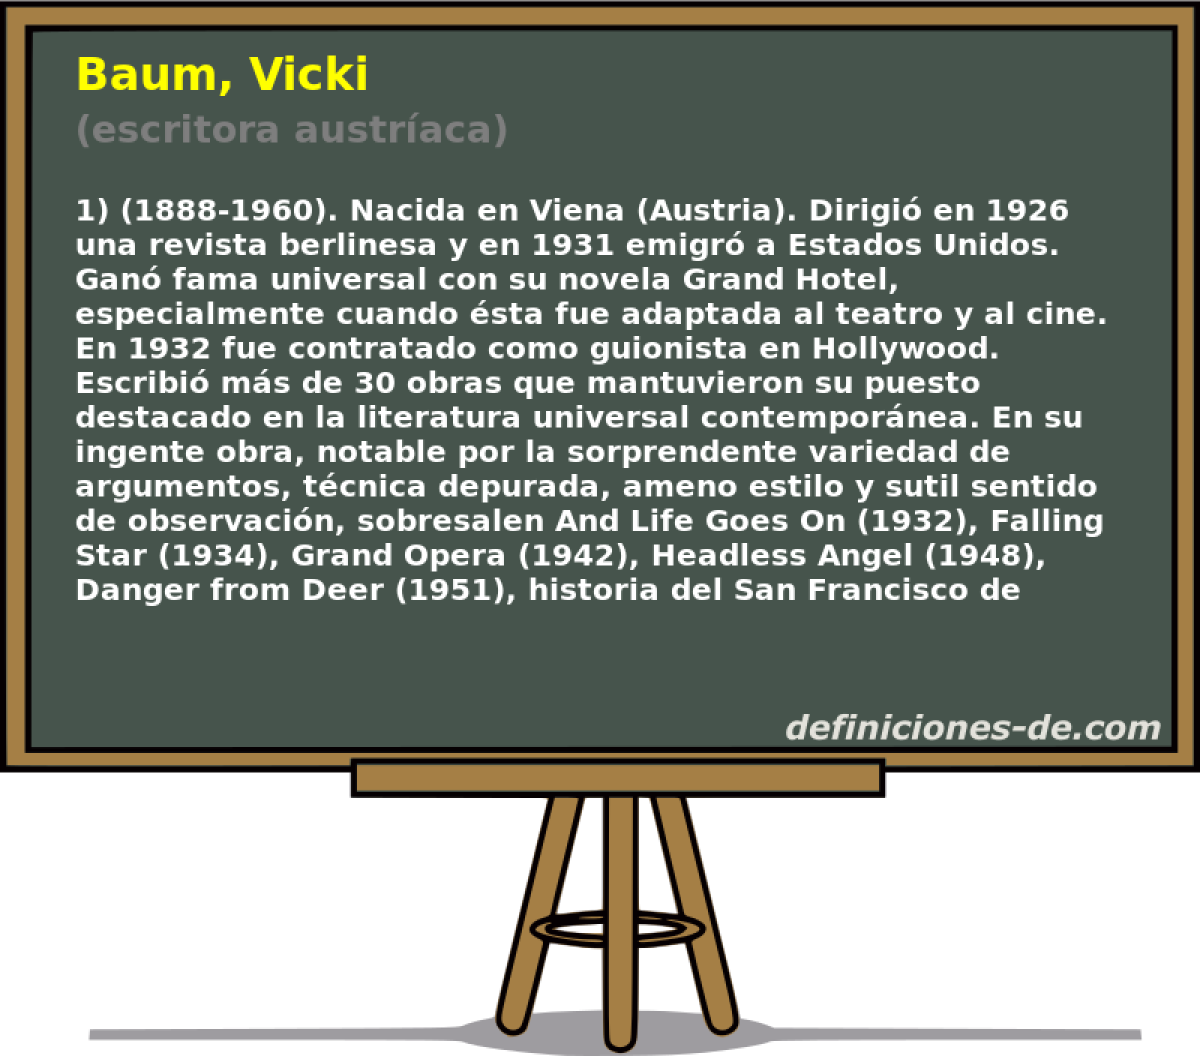 Baum, Vicki (escritora austraca)